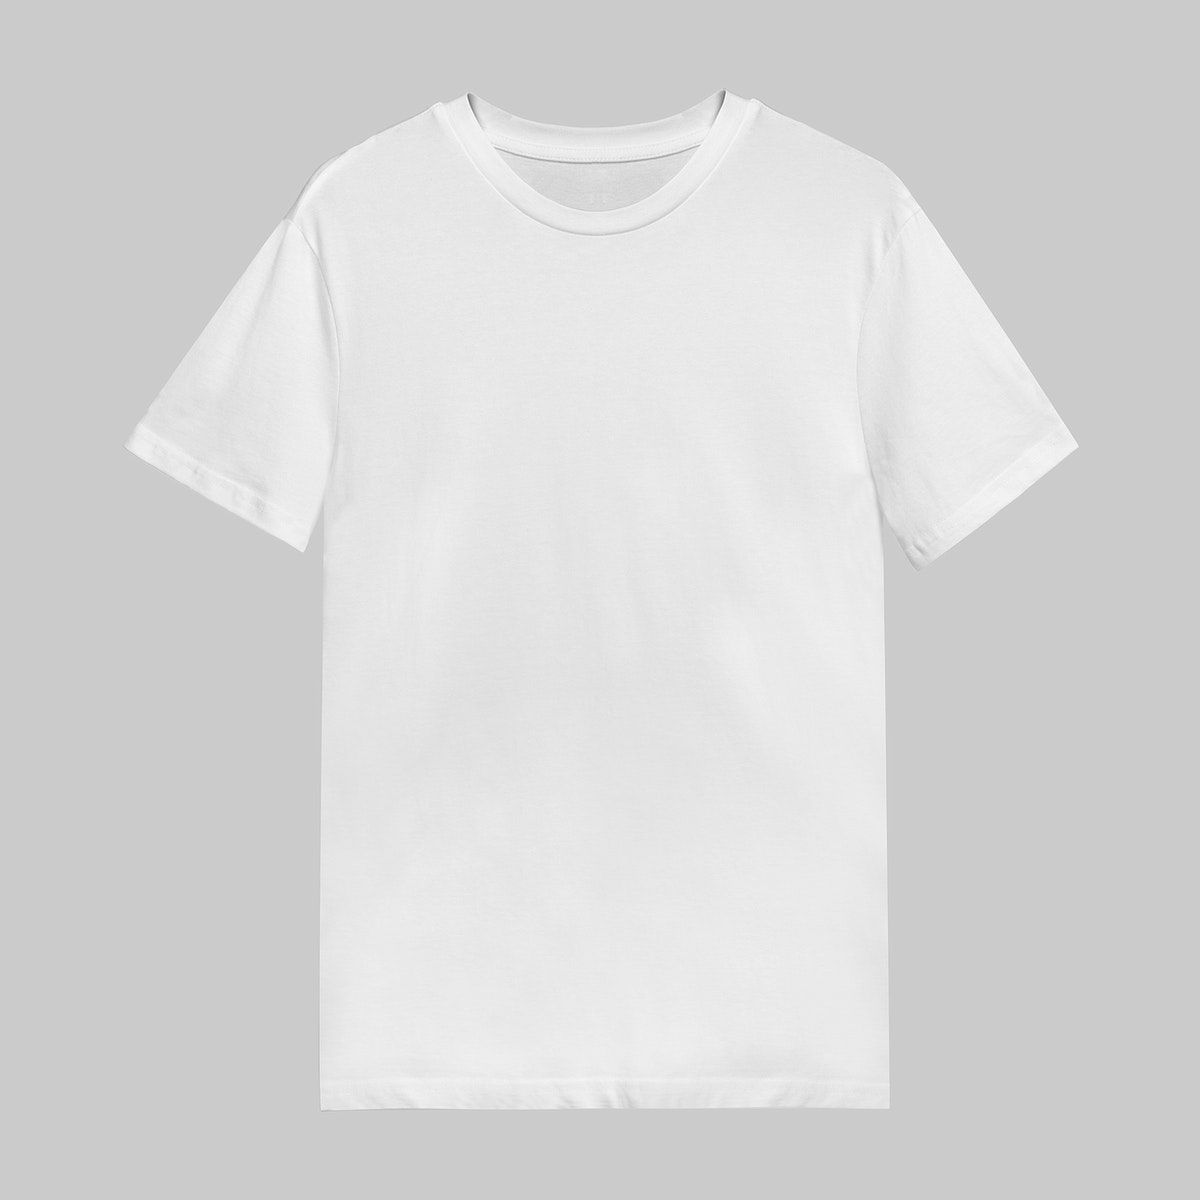 Mock Up T Shirt White